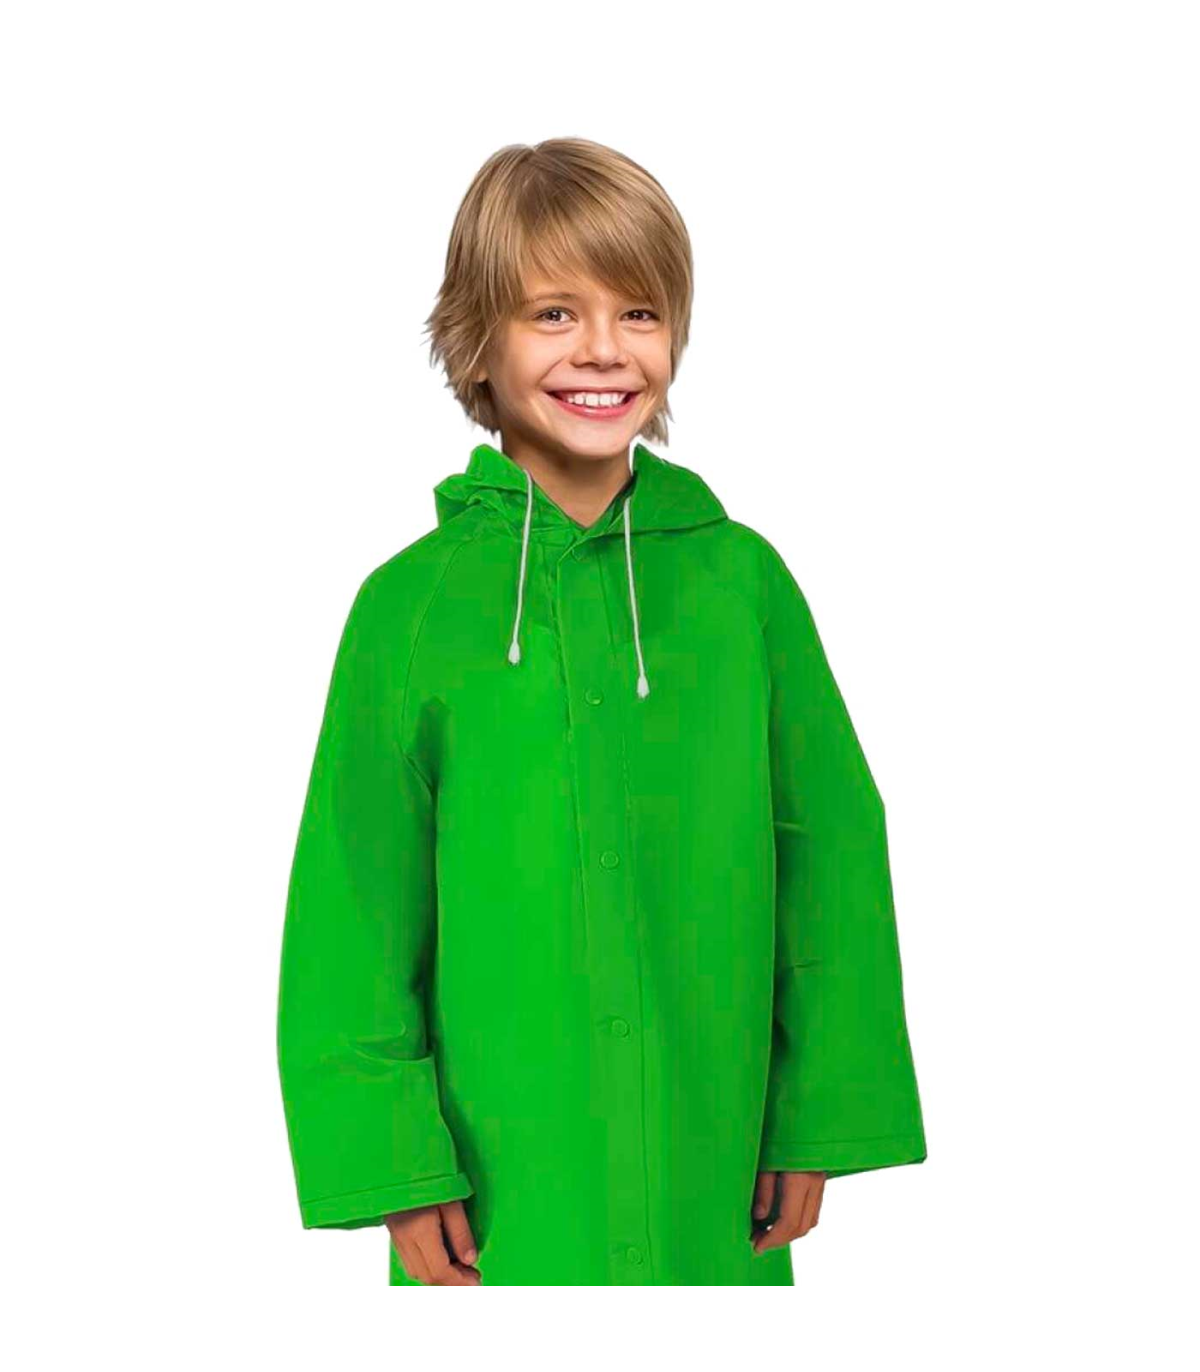 Tradineur - Chubasquero con capucha para niños - Fabricado en poliéster -  Costura termoselladas - Talla para niños de 8 a 10 año